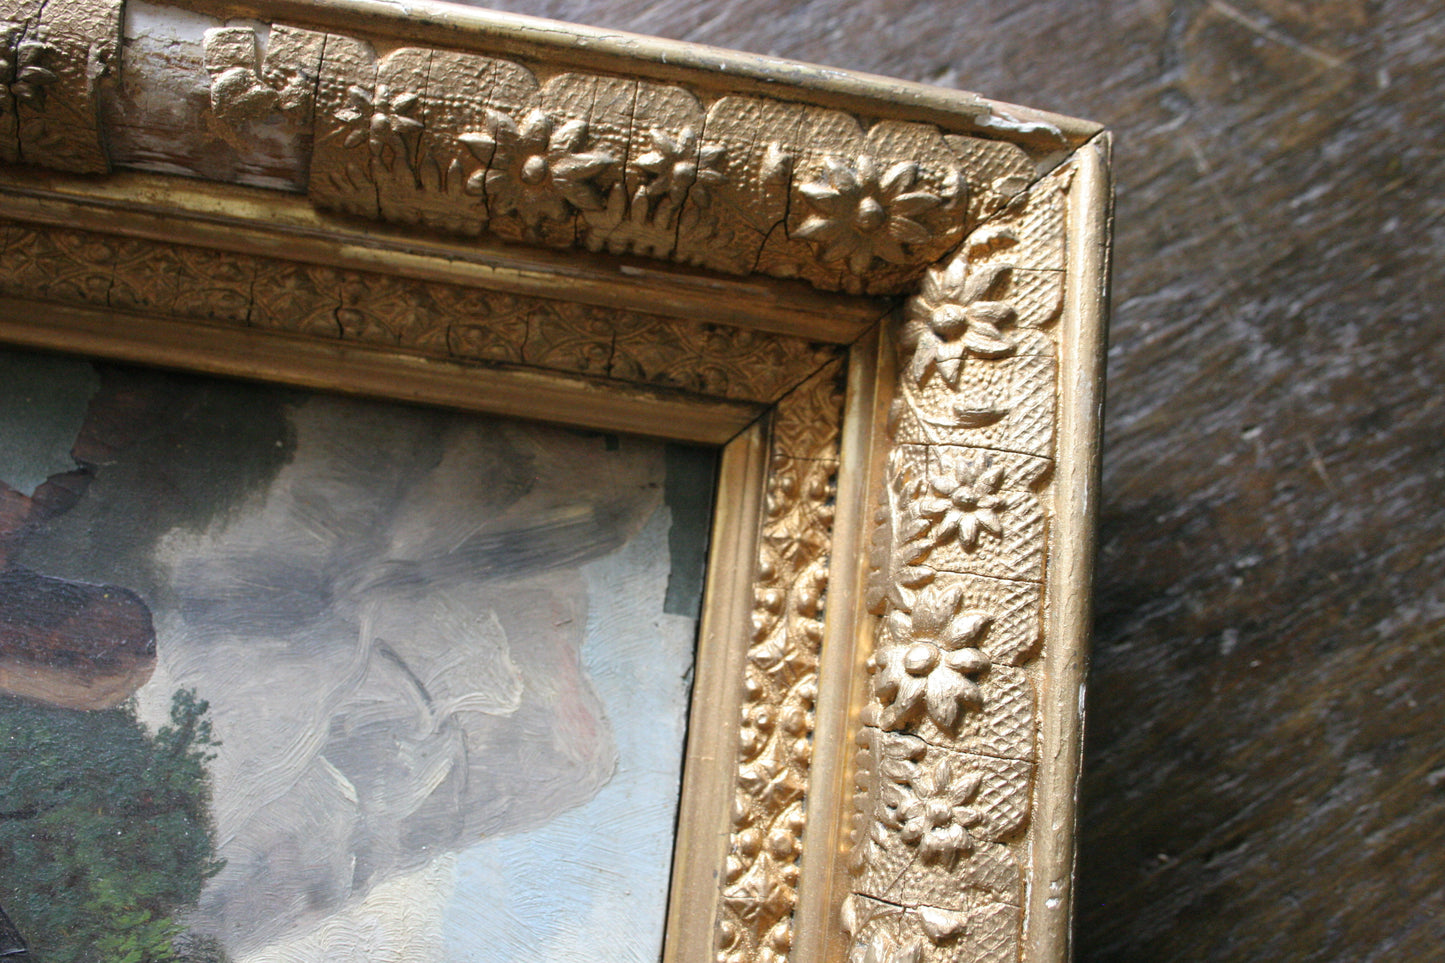 Antique landscape oil painting on board in gilded floral frame